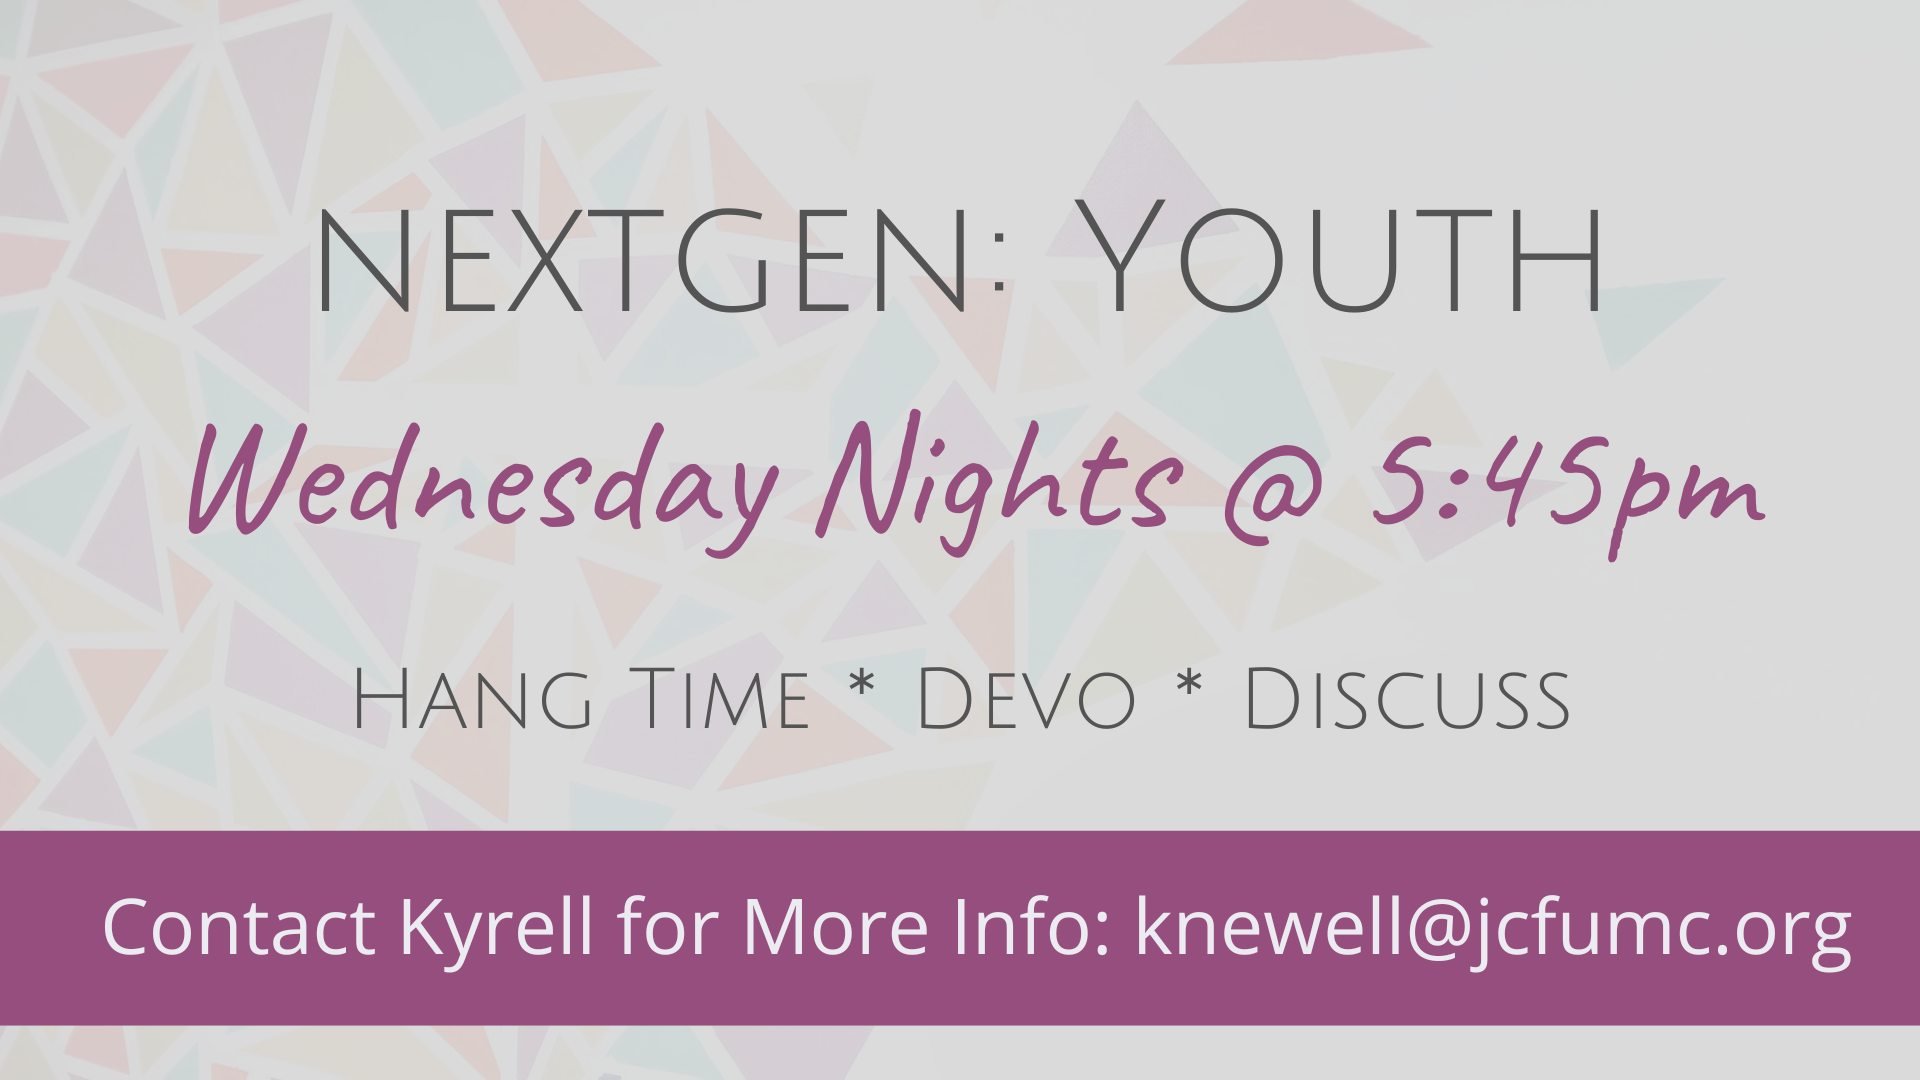 😎See ya'll tonight!

#jcfumc #jcfumcnextgen #Wednesdaynightyouthgroup #nextgen